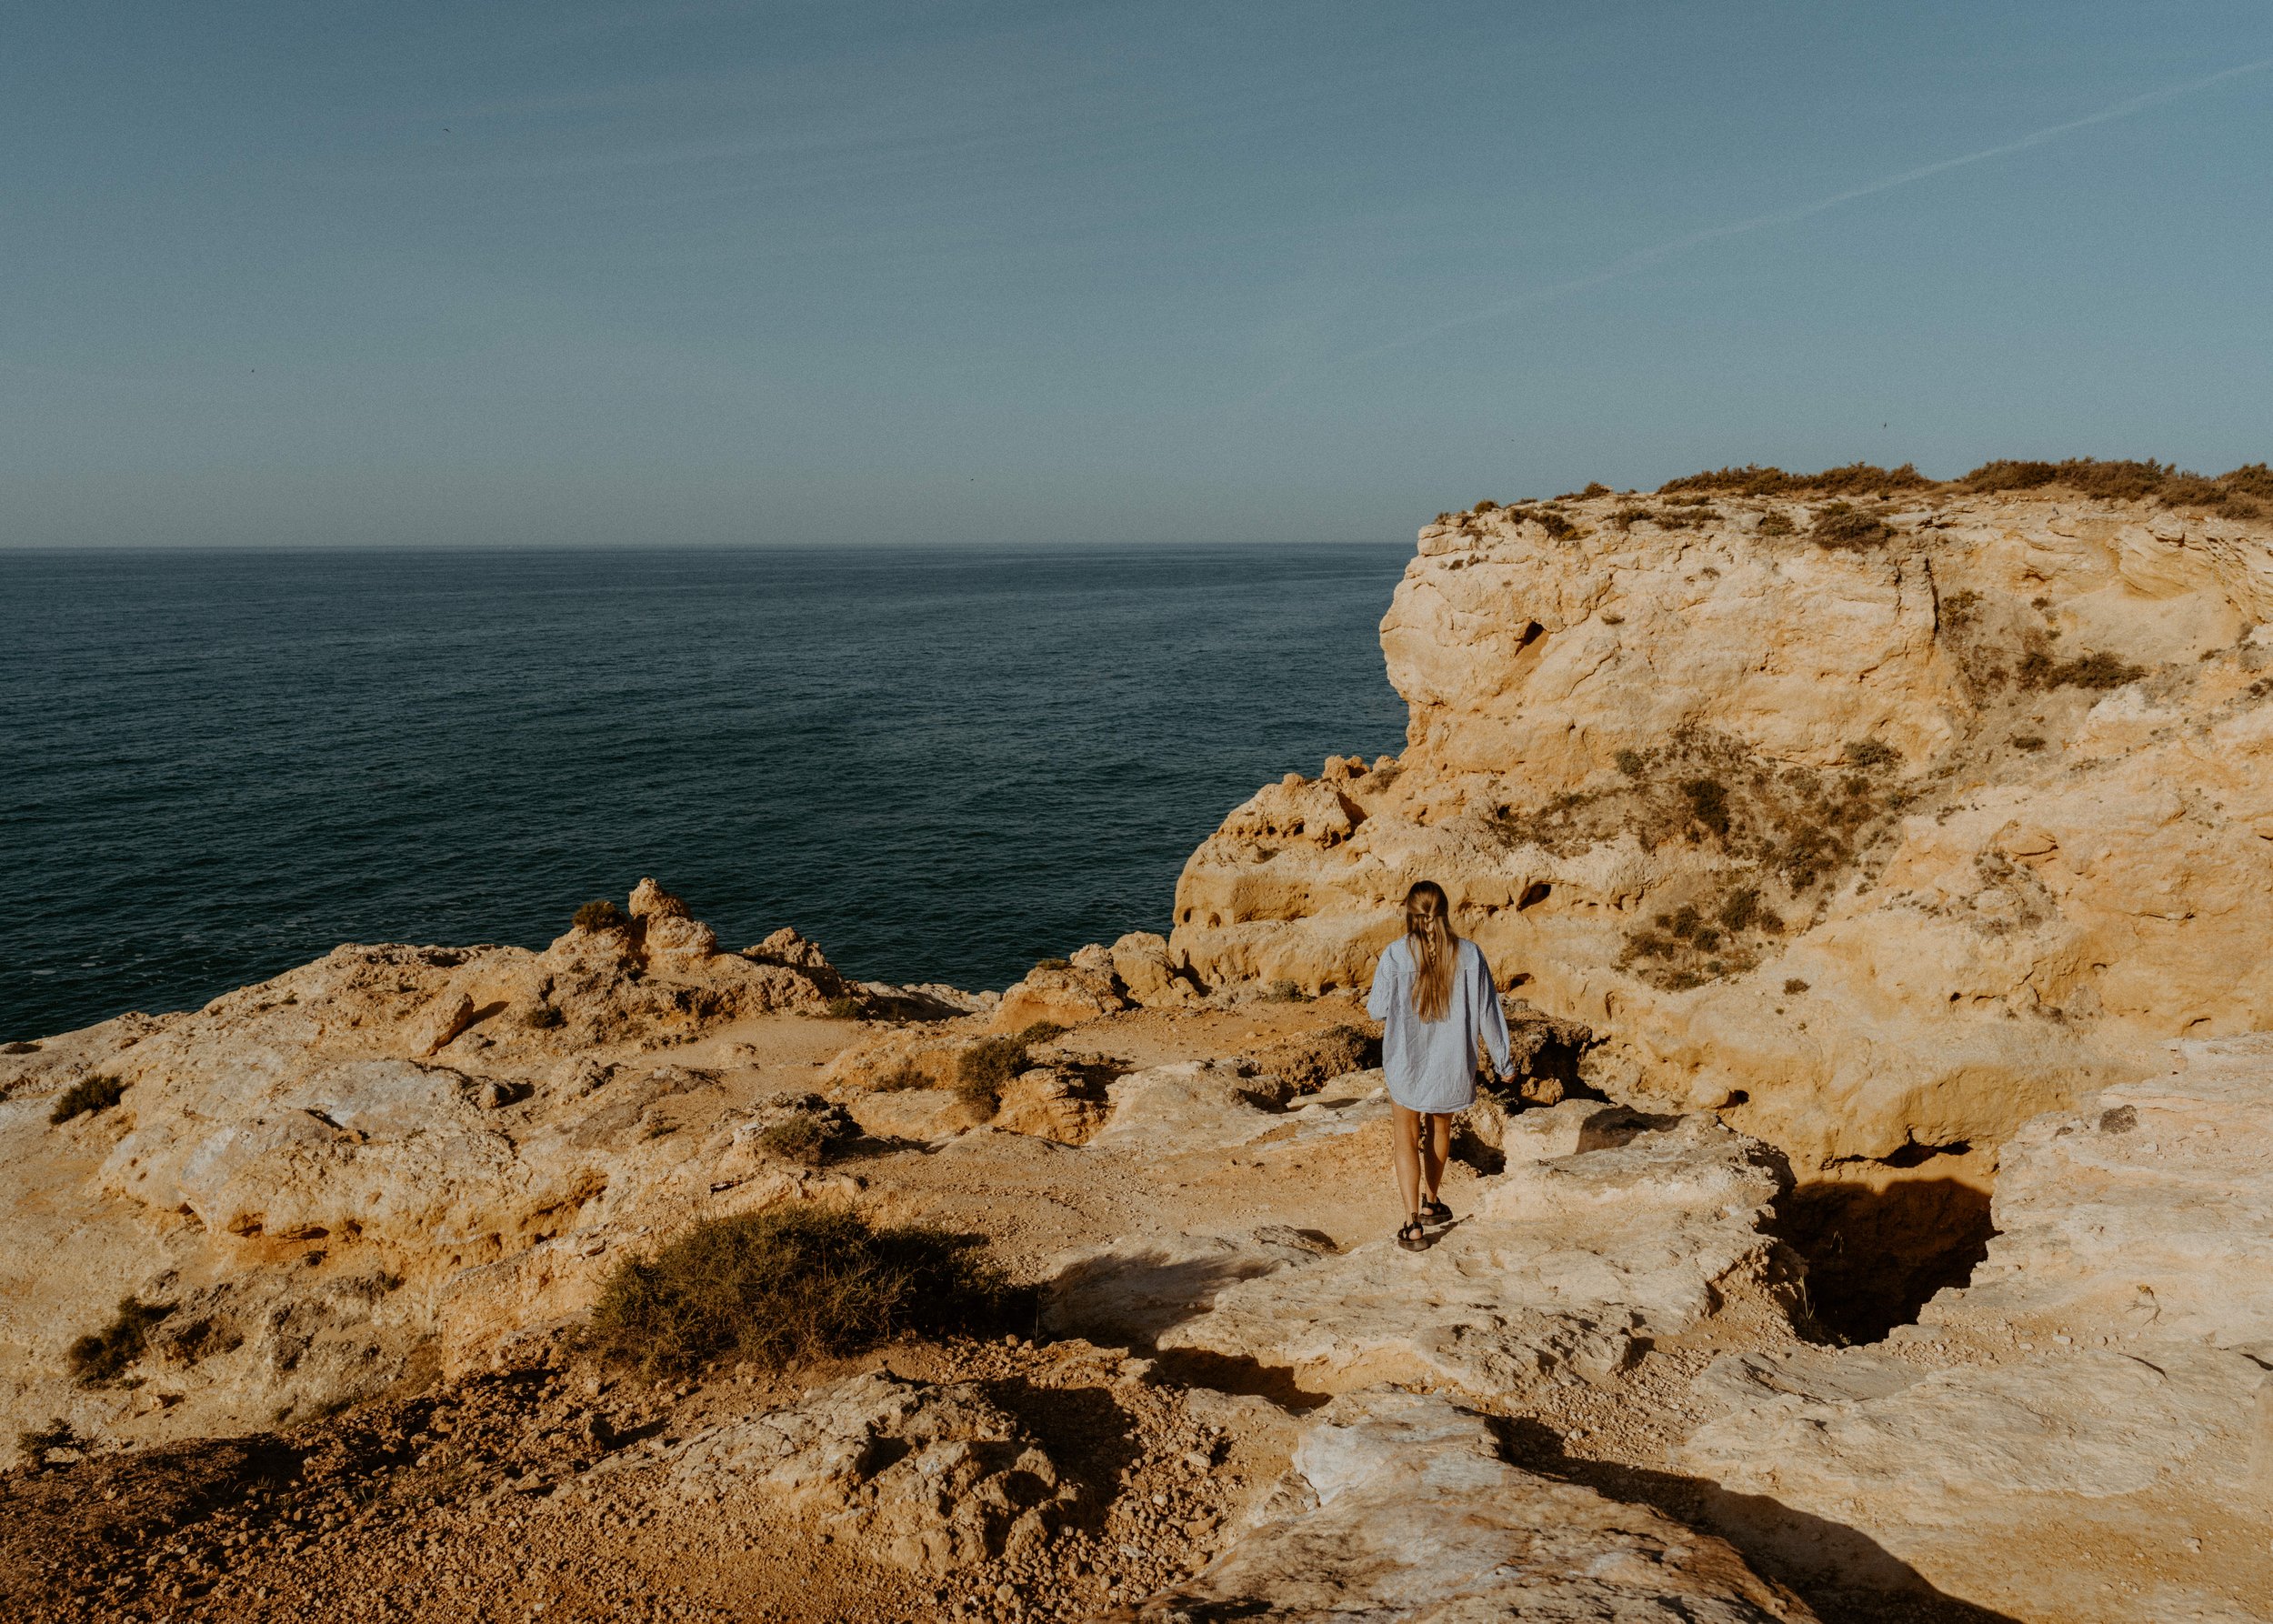 Algor Seco rocky cliff area on Algarve Coast